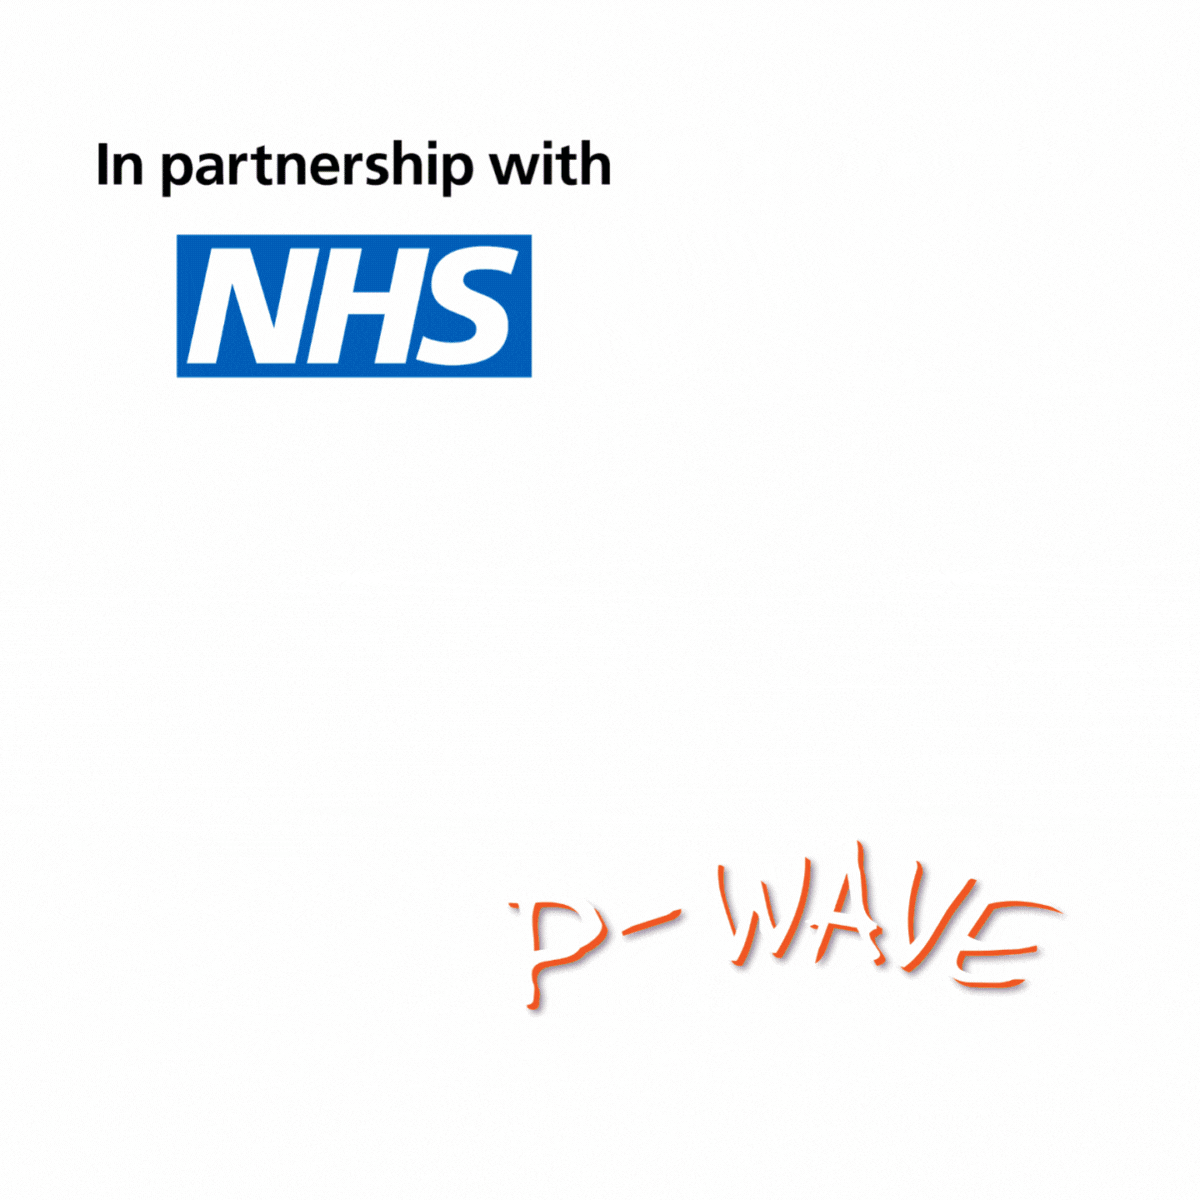 NHS & P-Wave Slant6 cancer partnership GIF